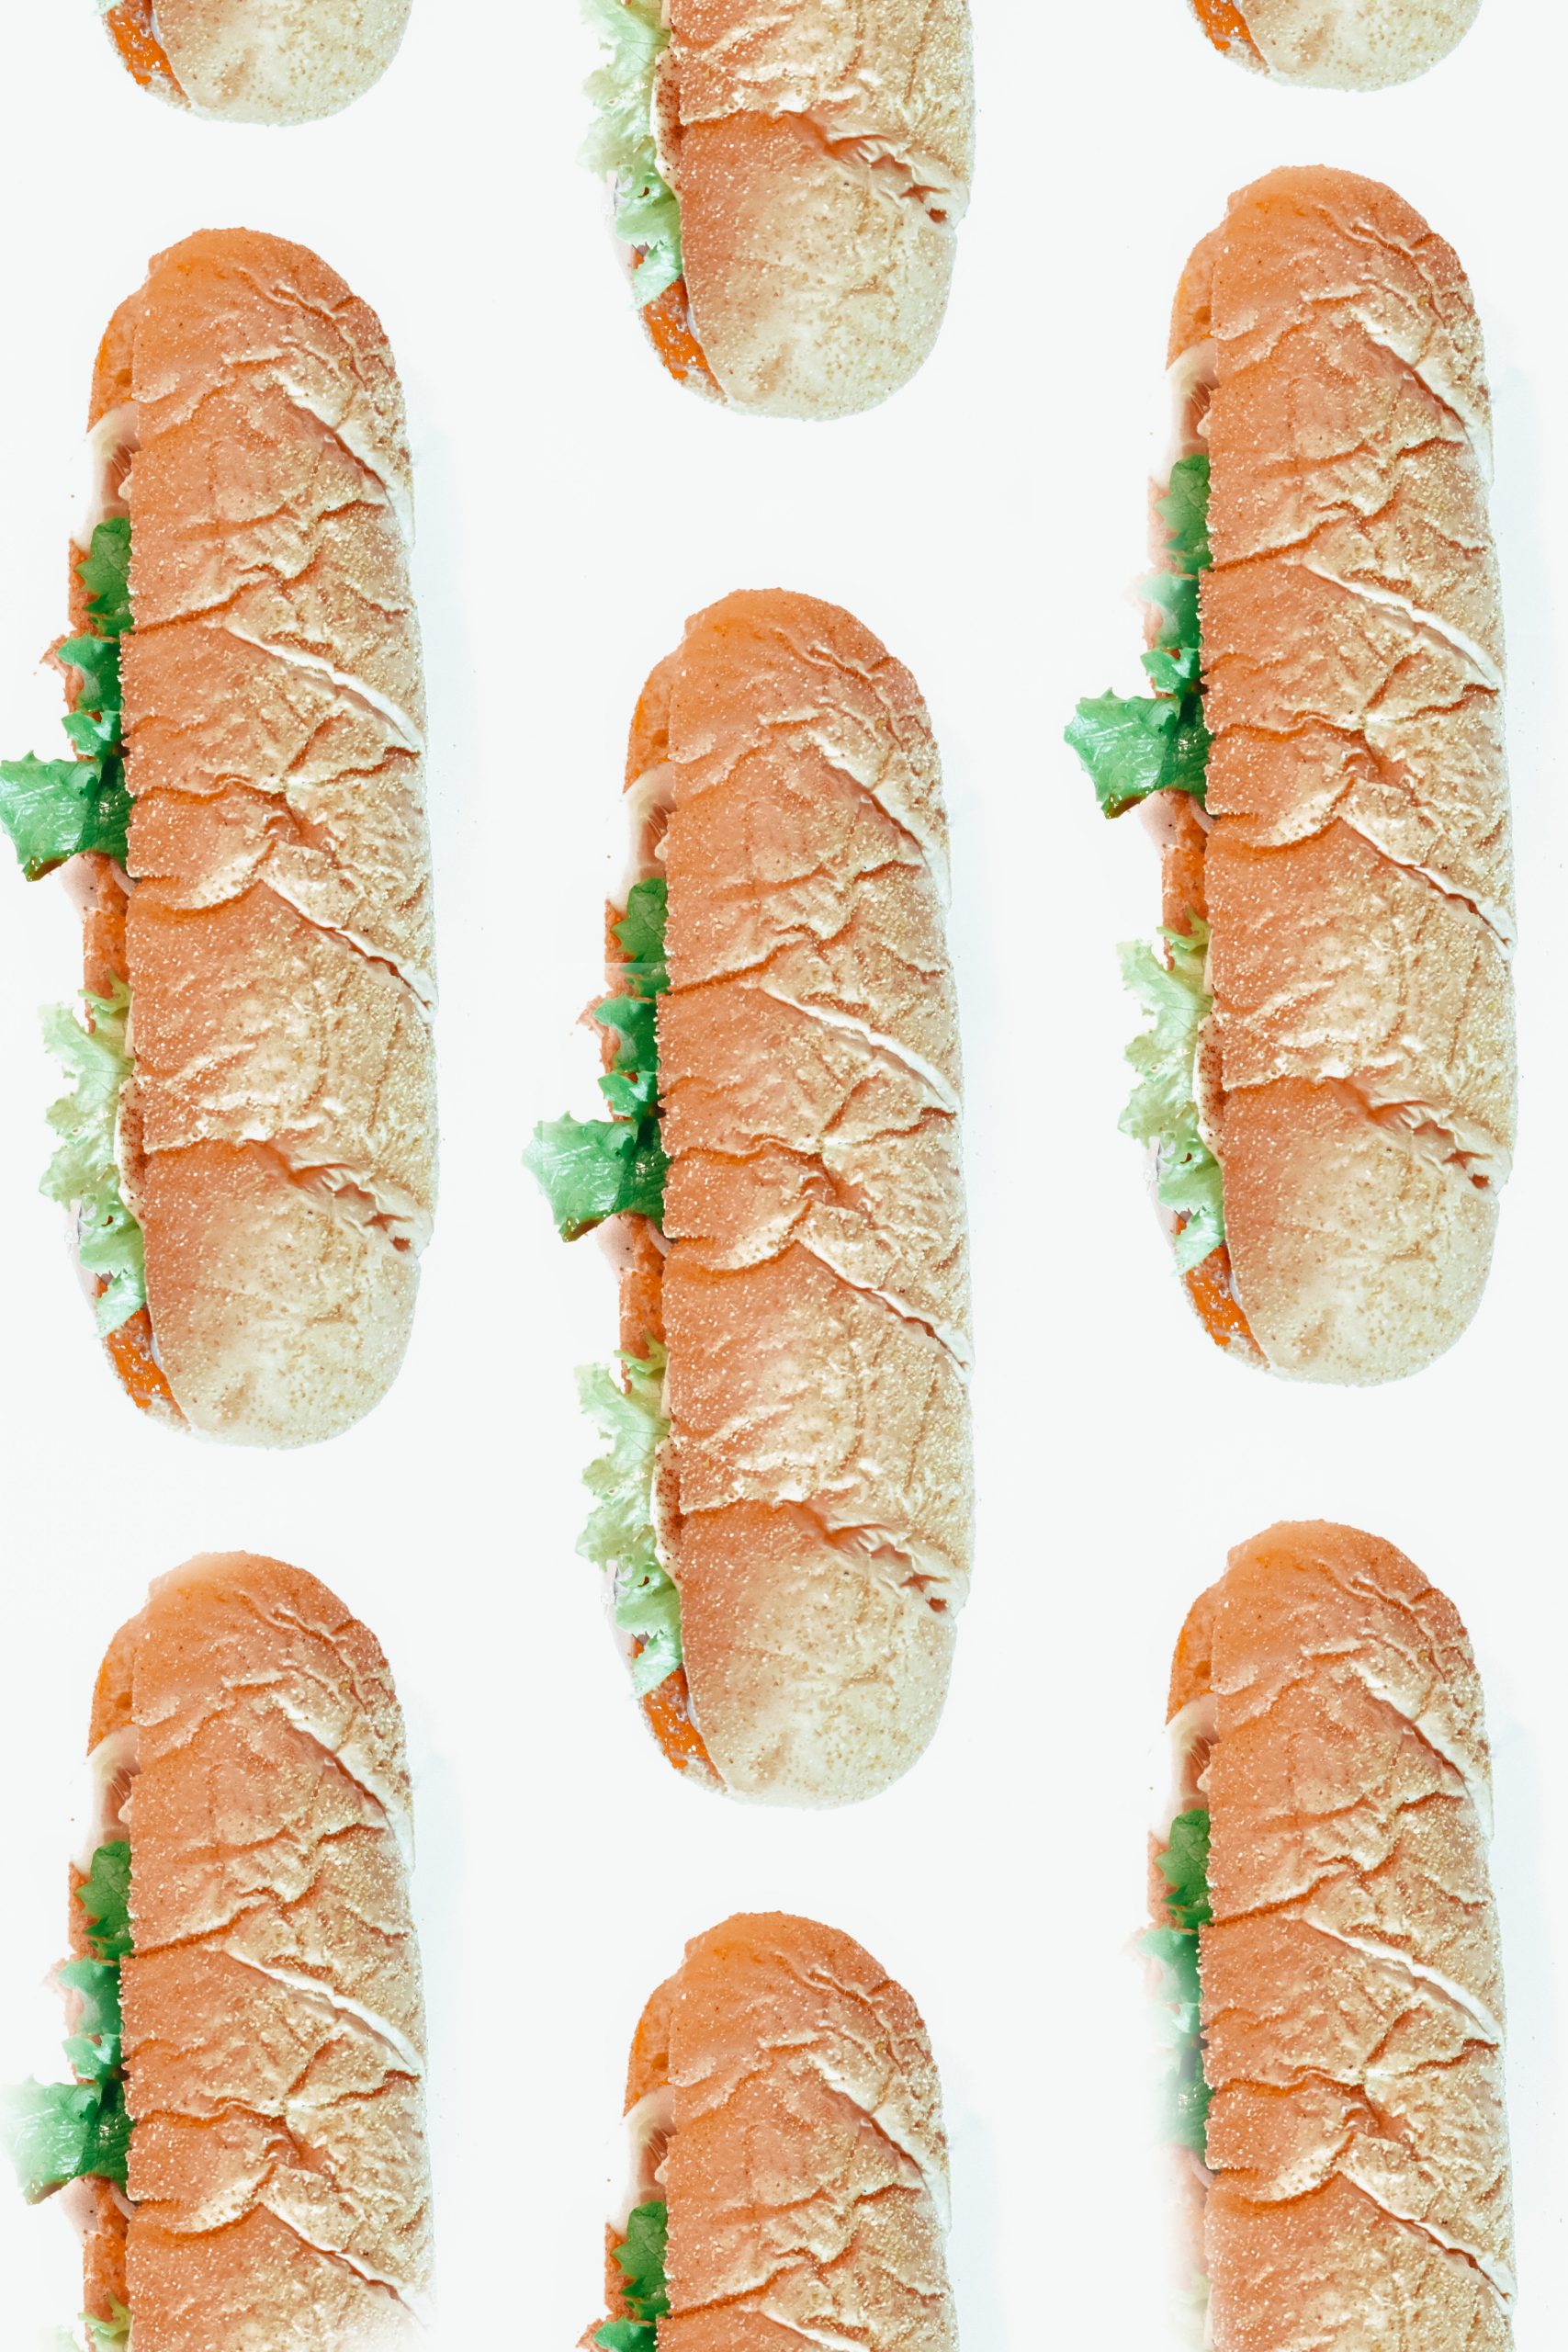 Footlong sandwich